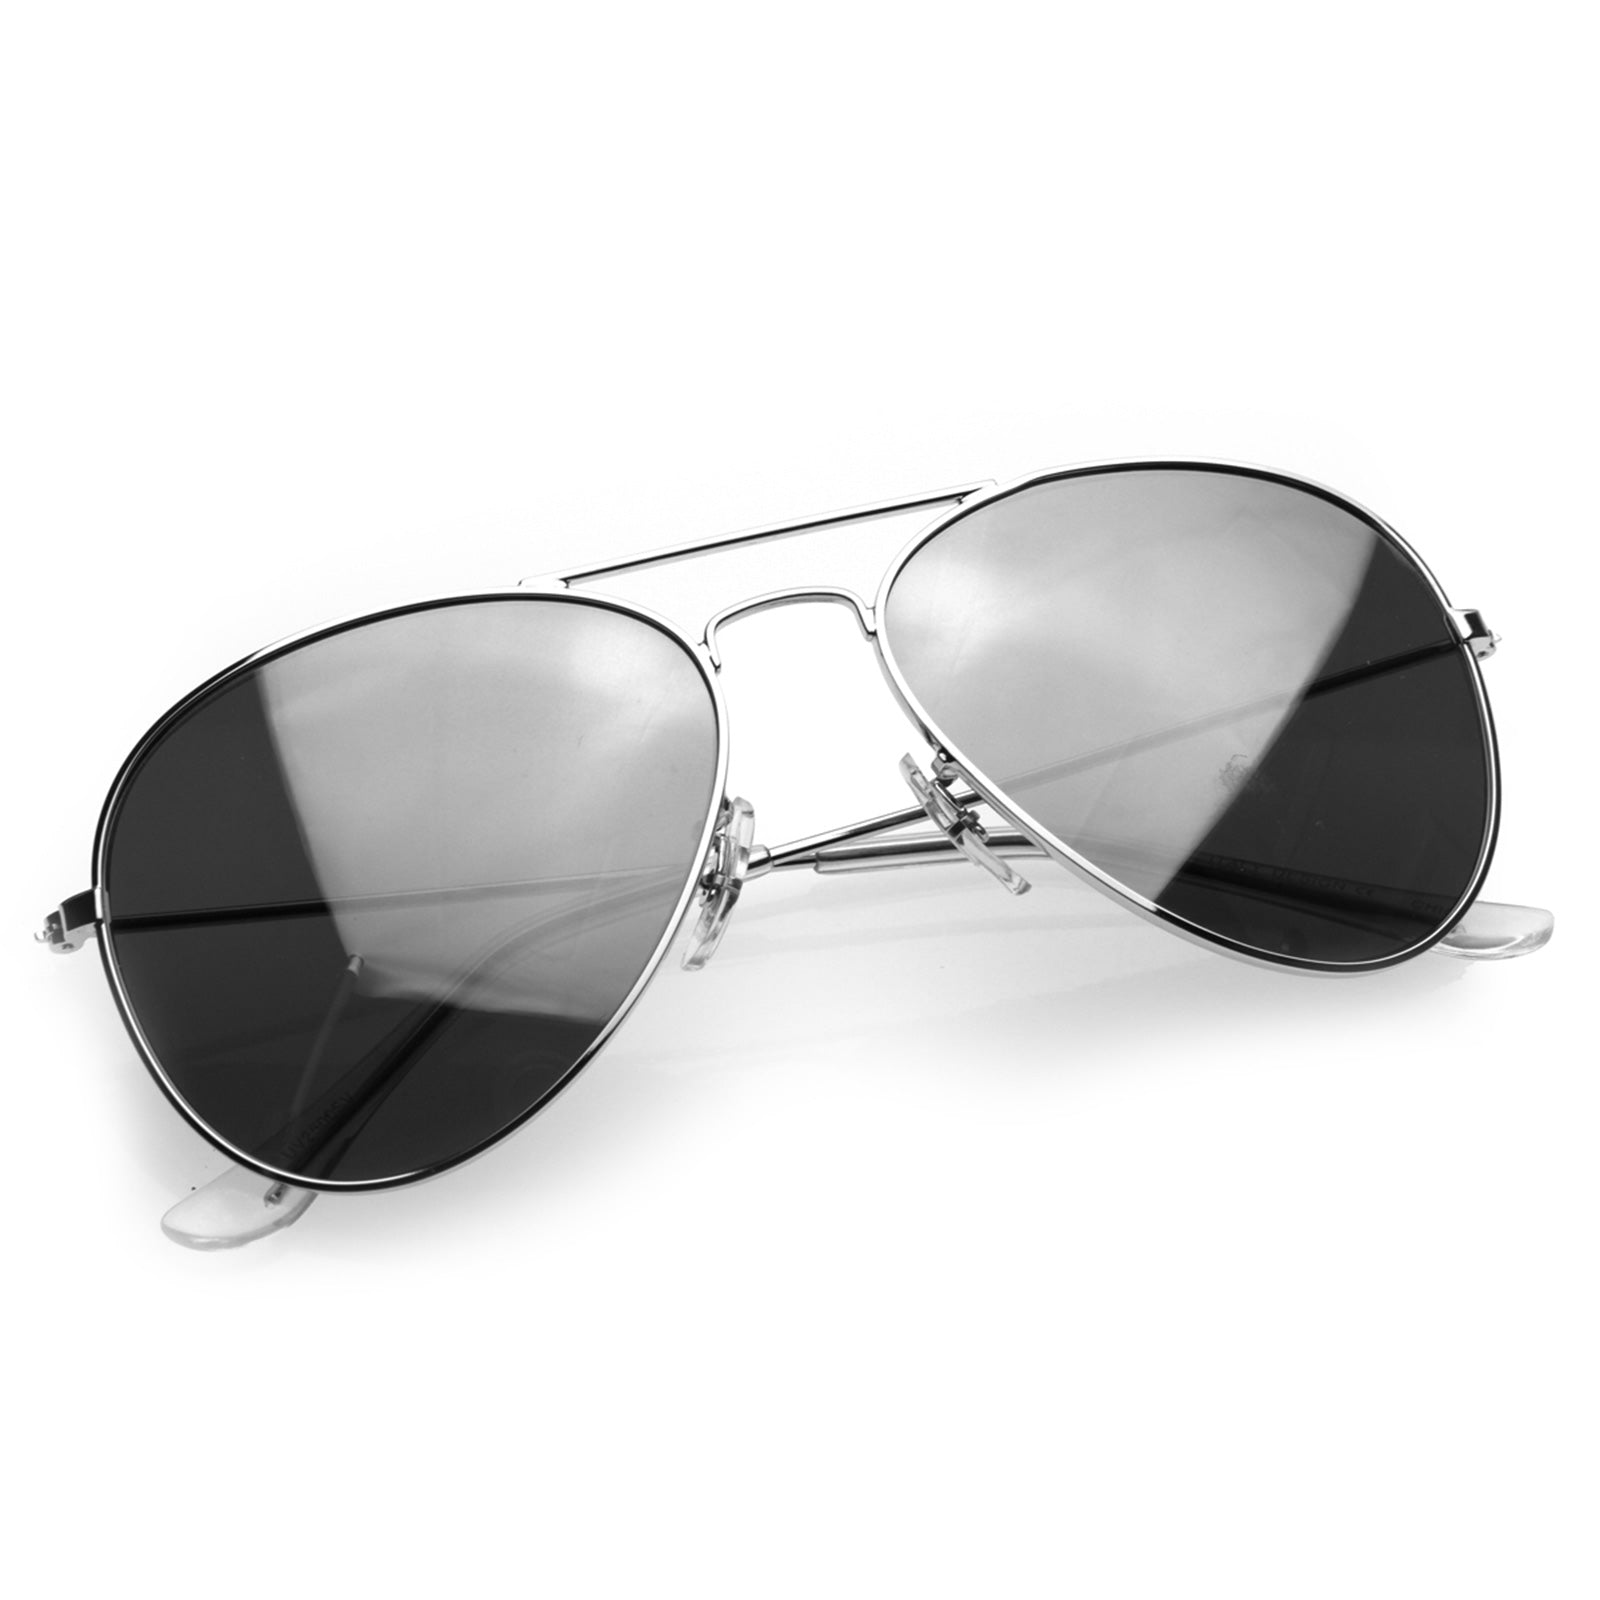 Aviators Silver Mirrored Metal Sunglasses Aviator